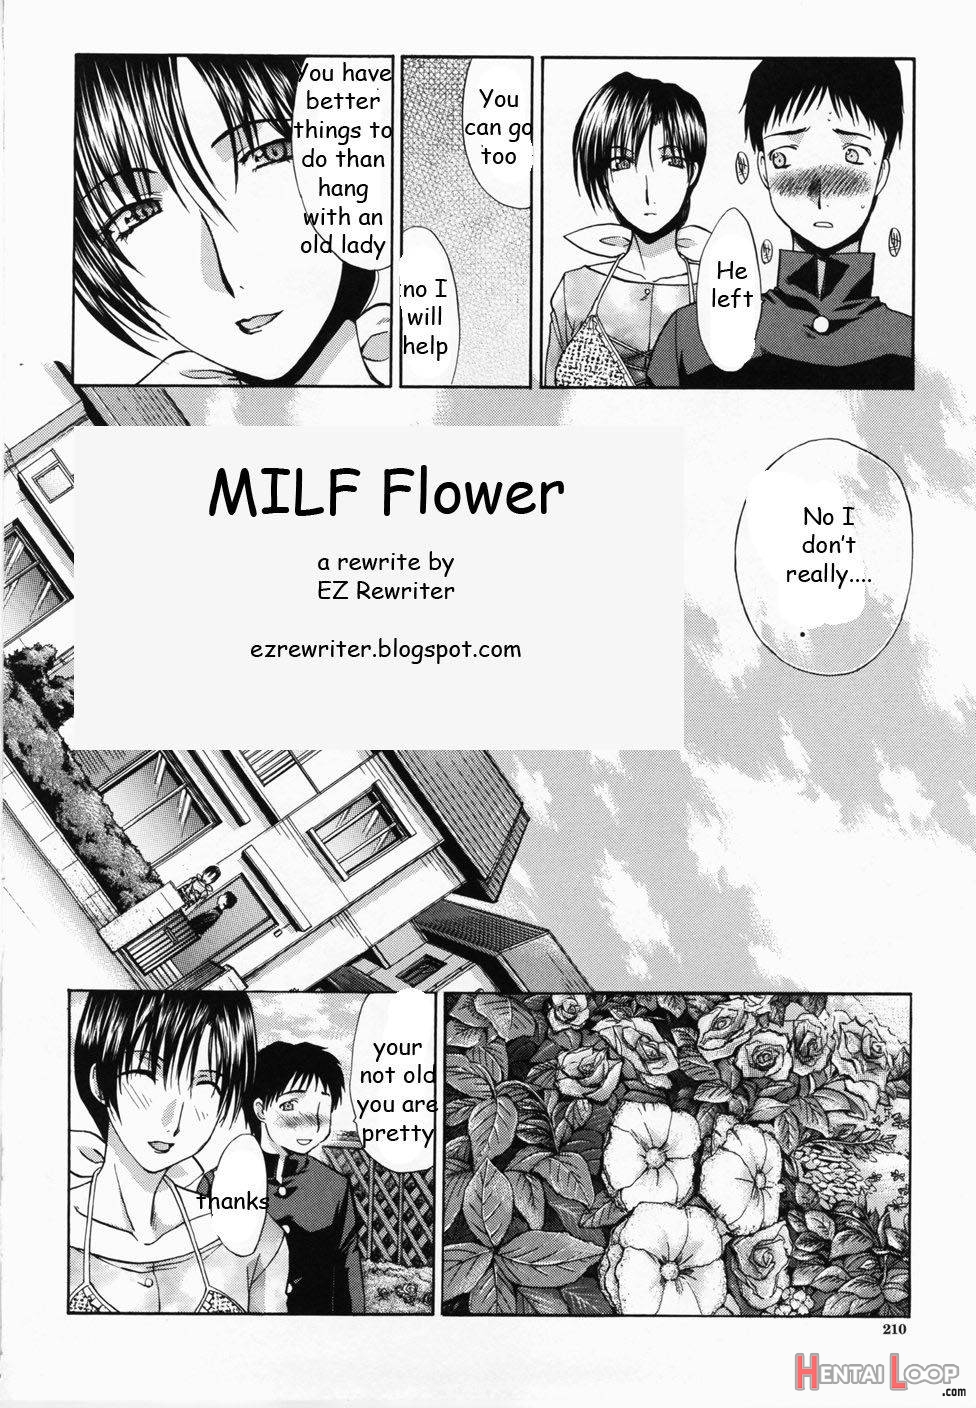 Milf Flower page 2